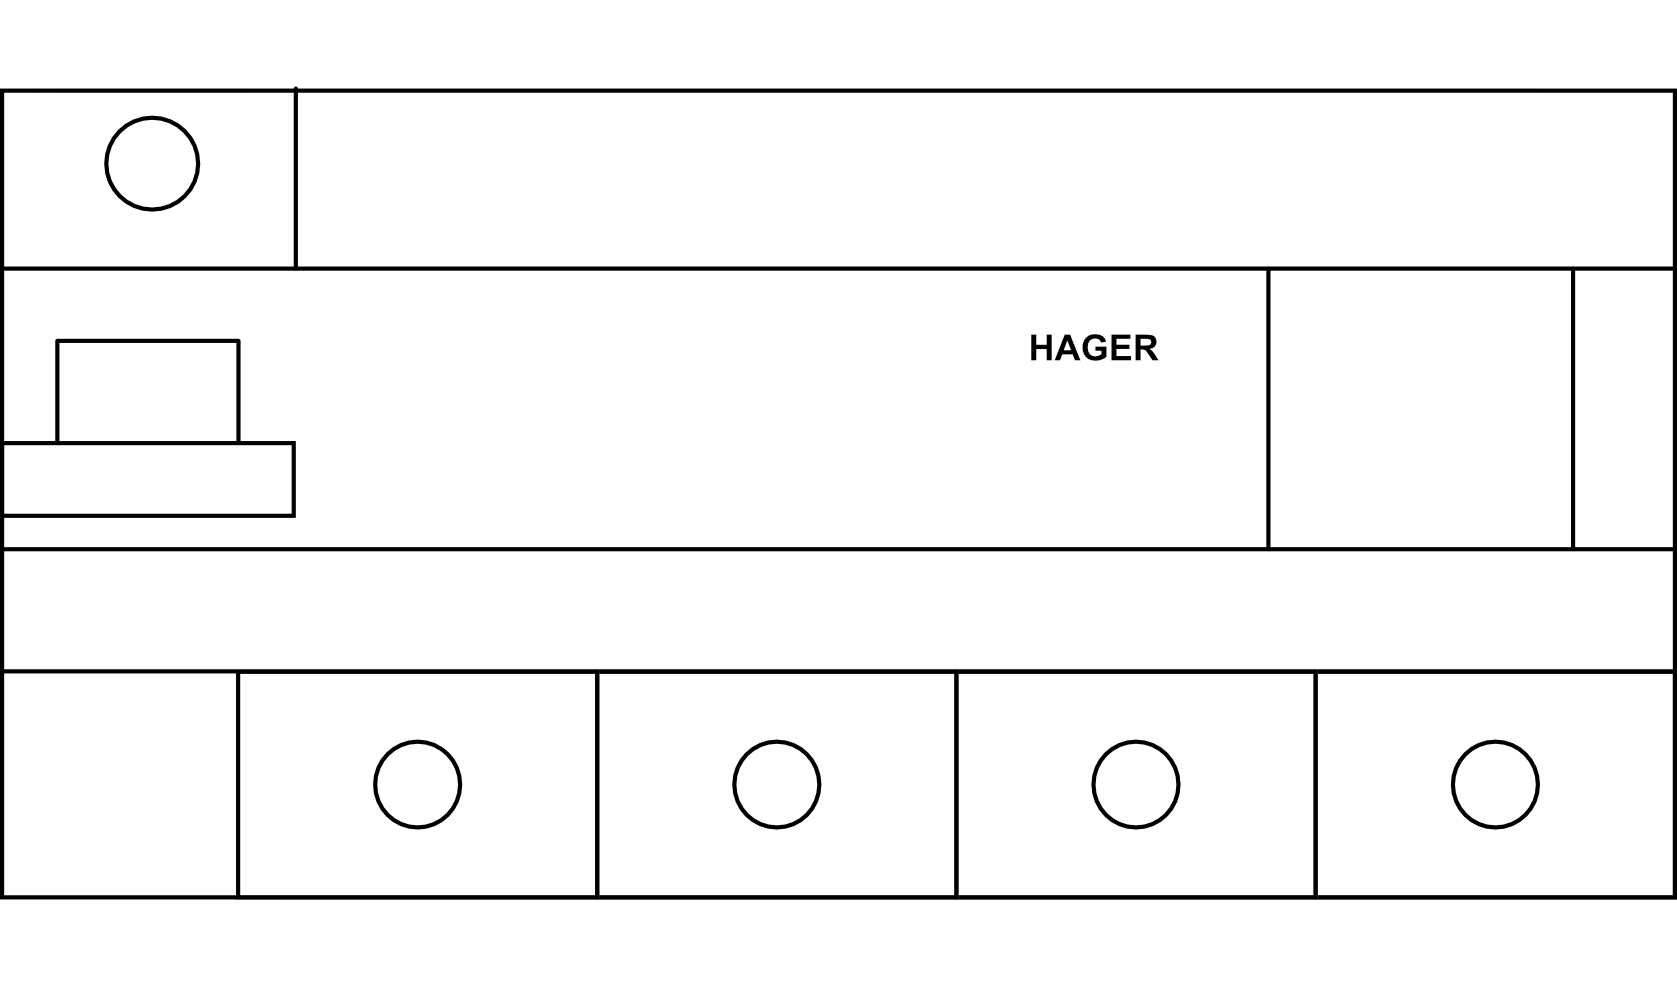 Chráničový blok Hager 4P/125A 300, 
500, 1000 mA HI